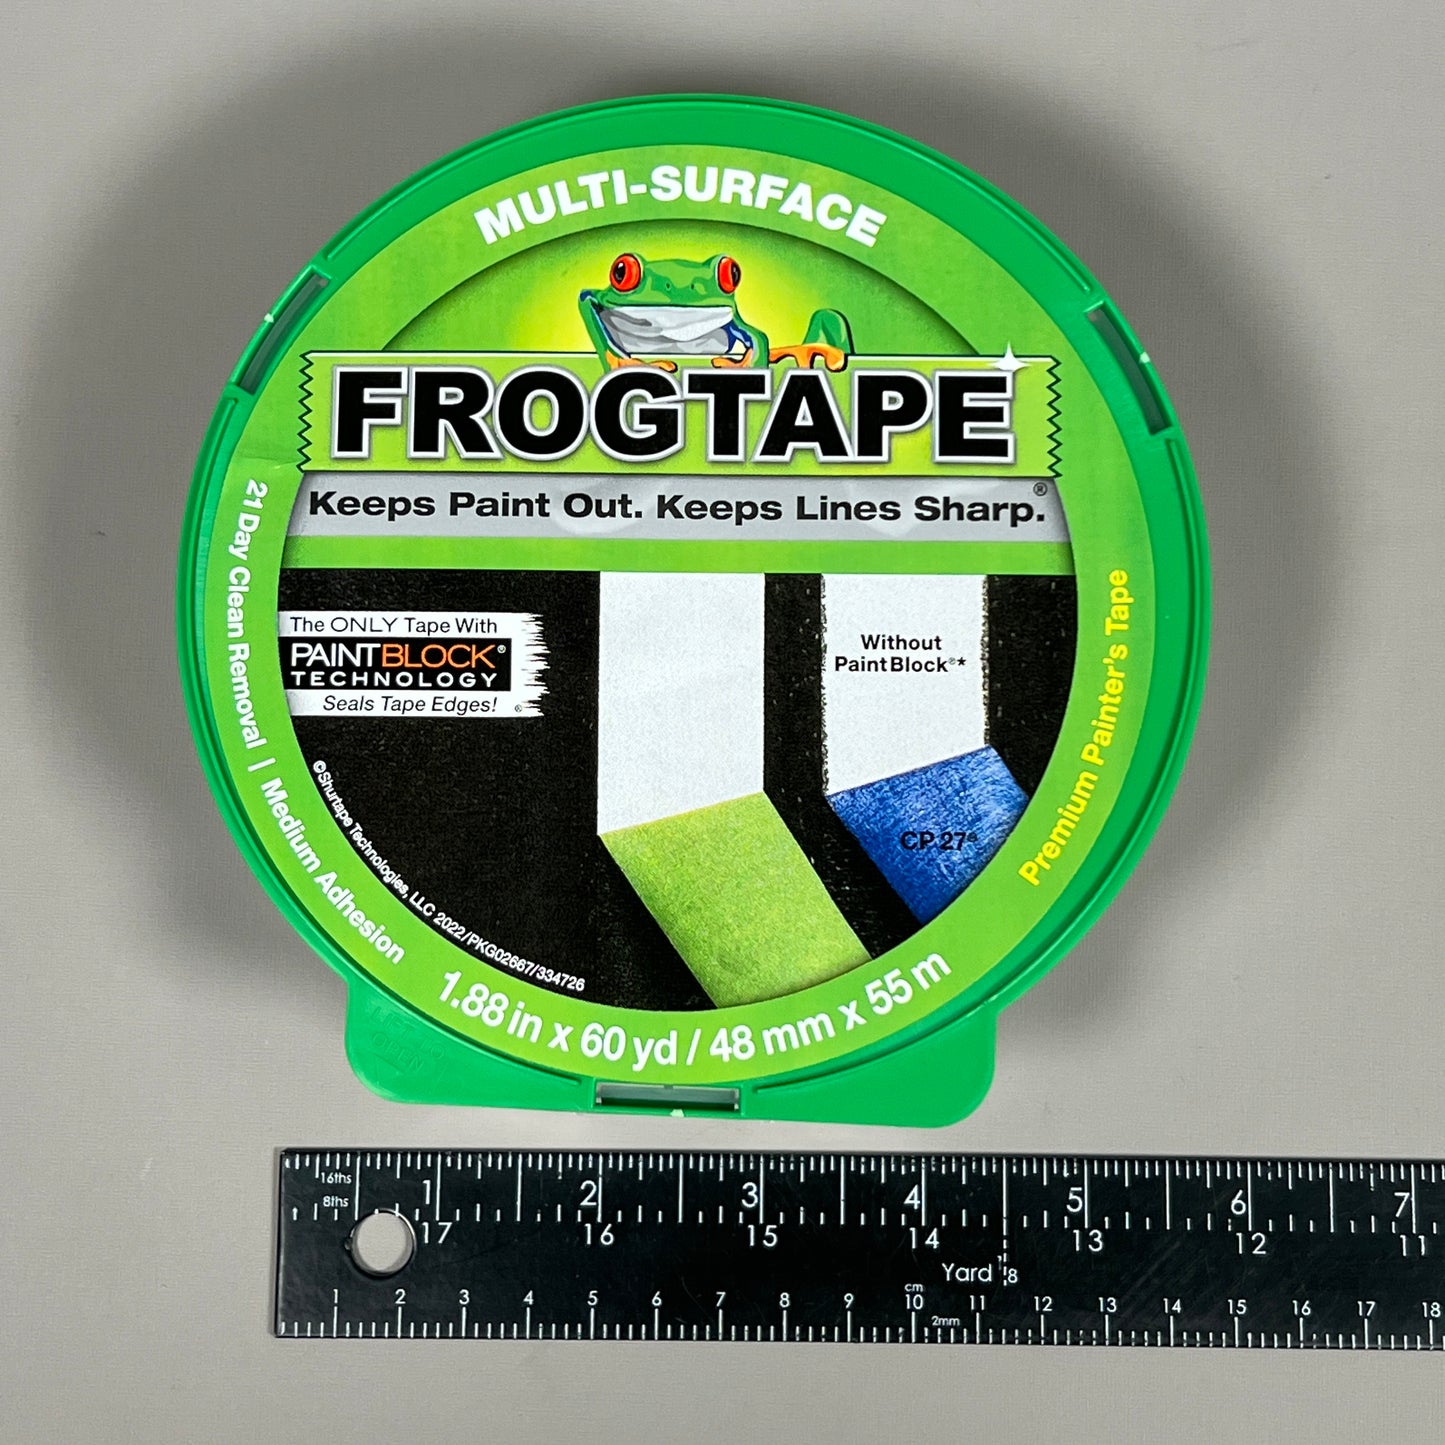 2-PK SHURTAPE FROGTAPE Multi-Surface Masking Tape Green 1.88 in x 60 yd 334726 (New)